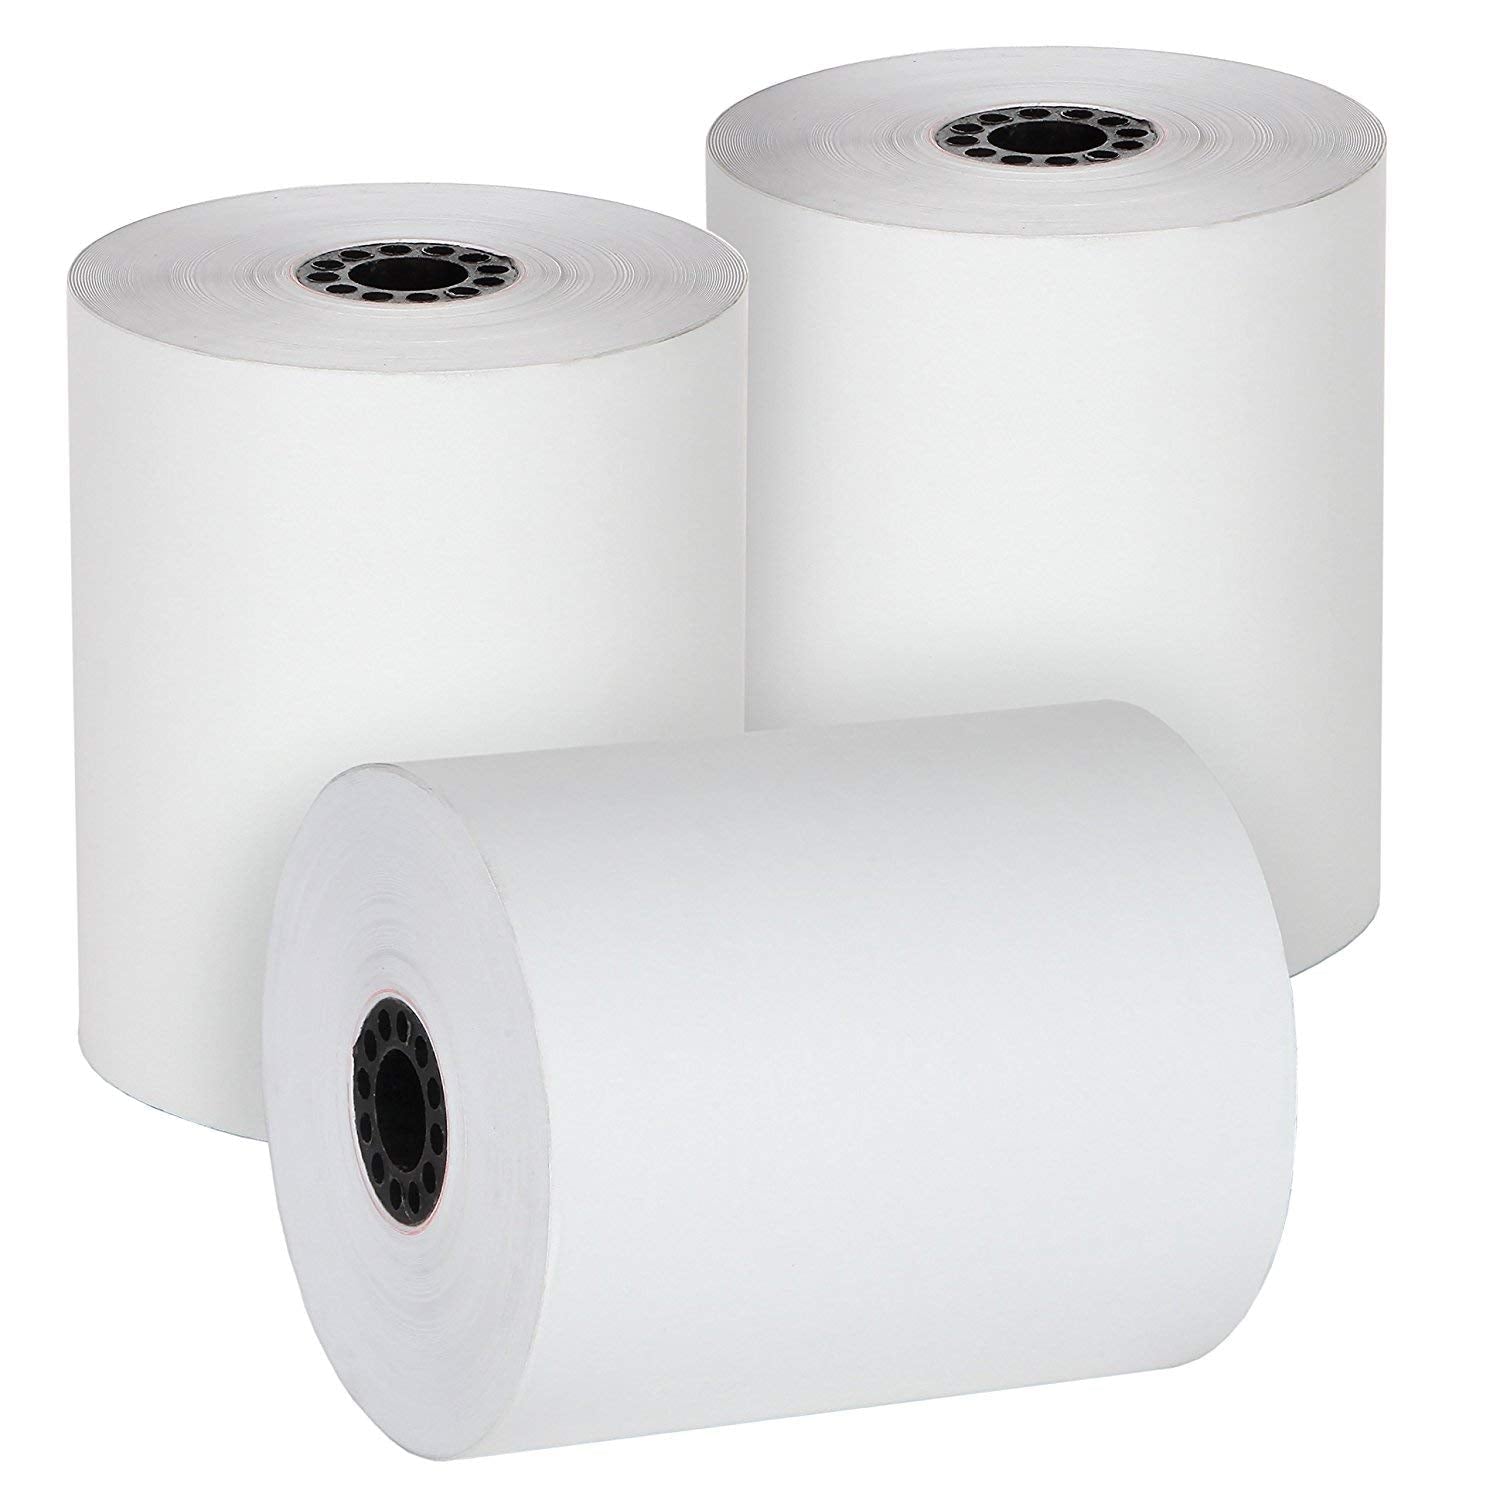 Cashier Depot Thermal Paper Rolls 2 1/4" X 85', Premium White, 50 Rolls - Cashier Depot